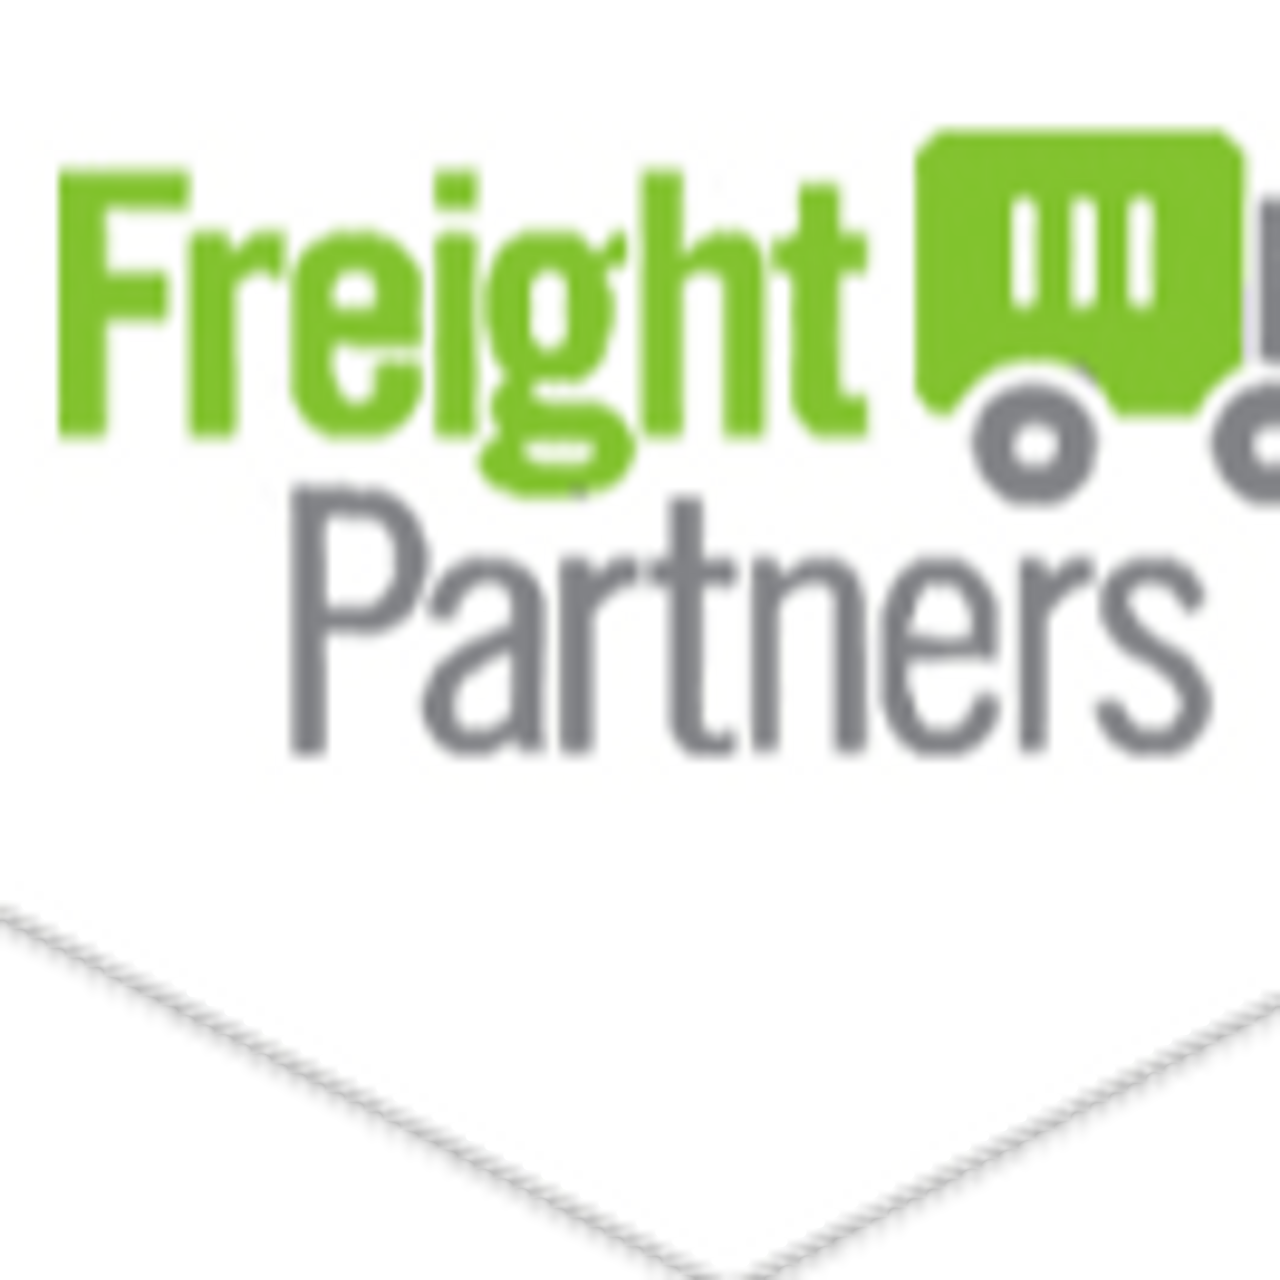 Freightpartners